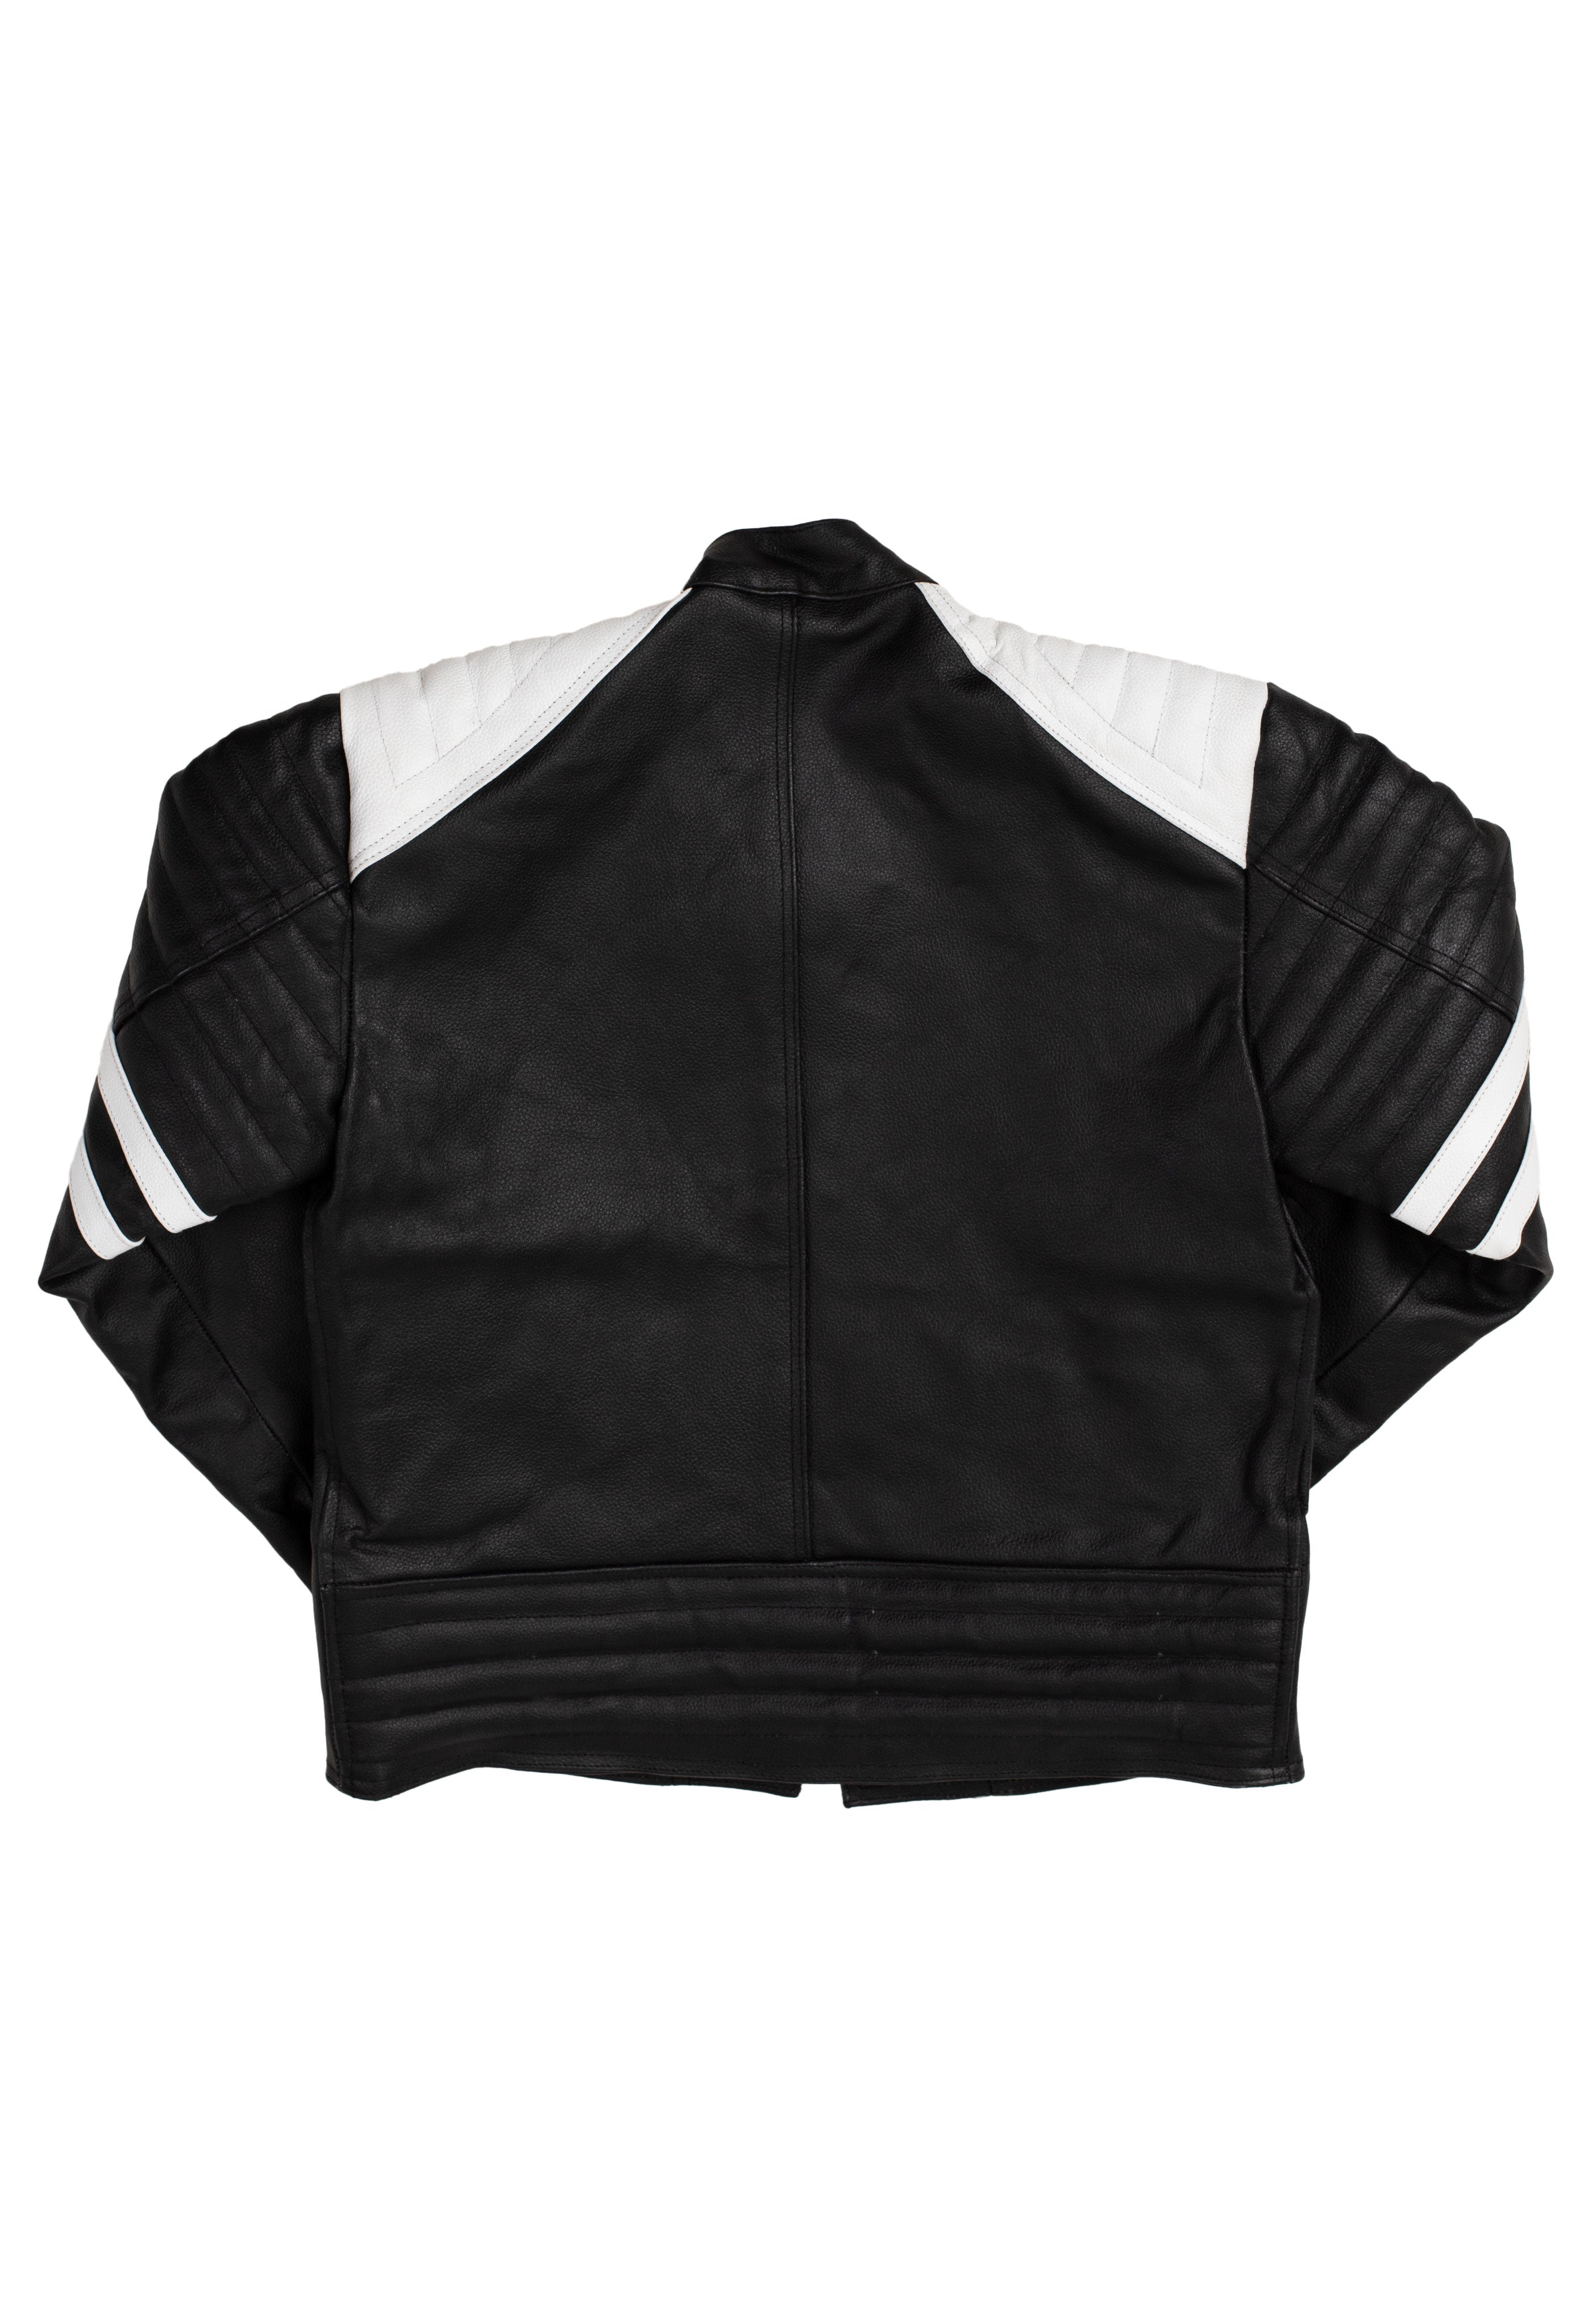 SexyPunk - Old School White/Black - Leather Jacket